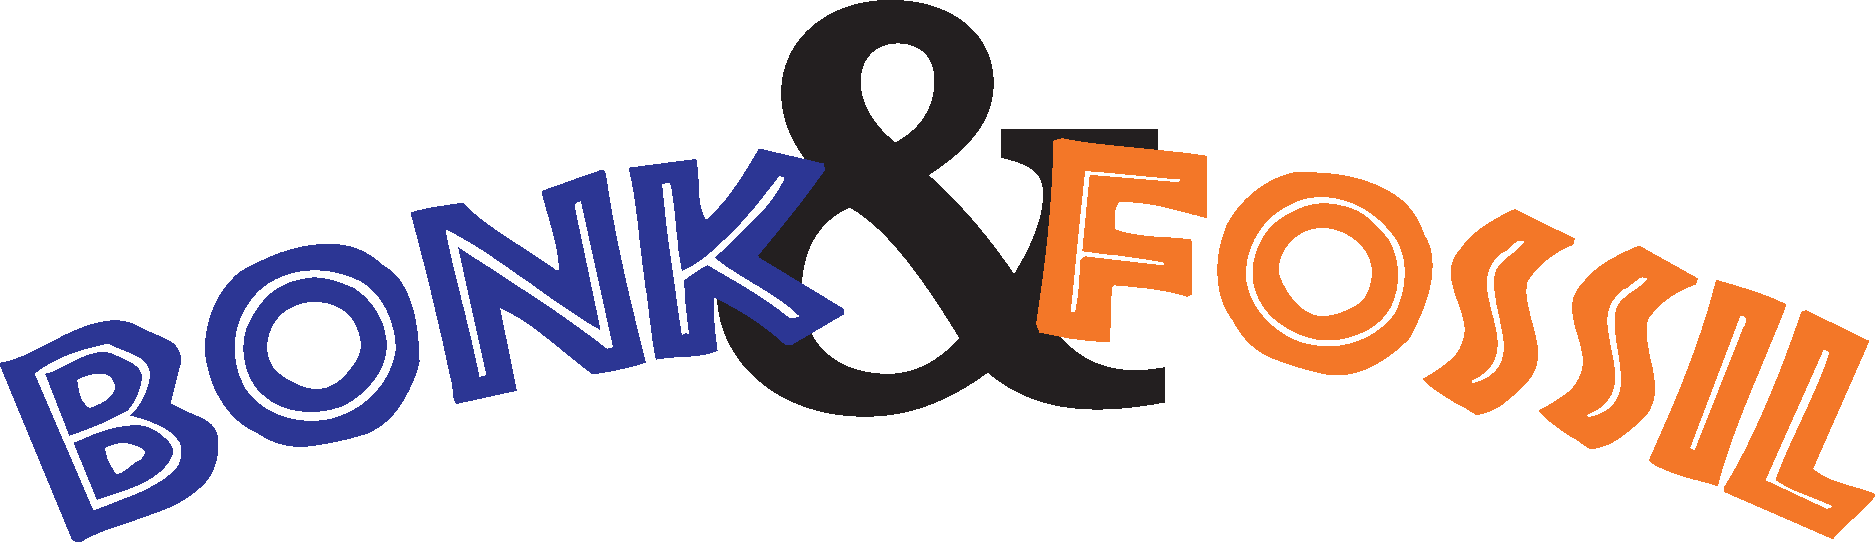 Bonk & Fossil Studios Logo Vector